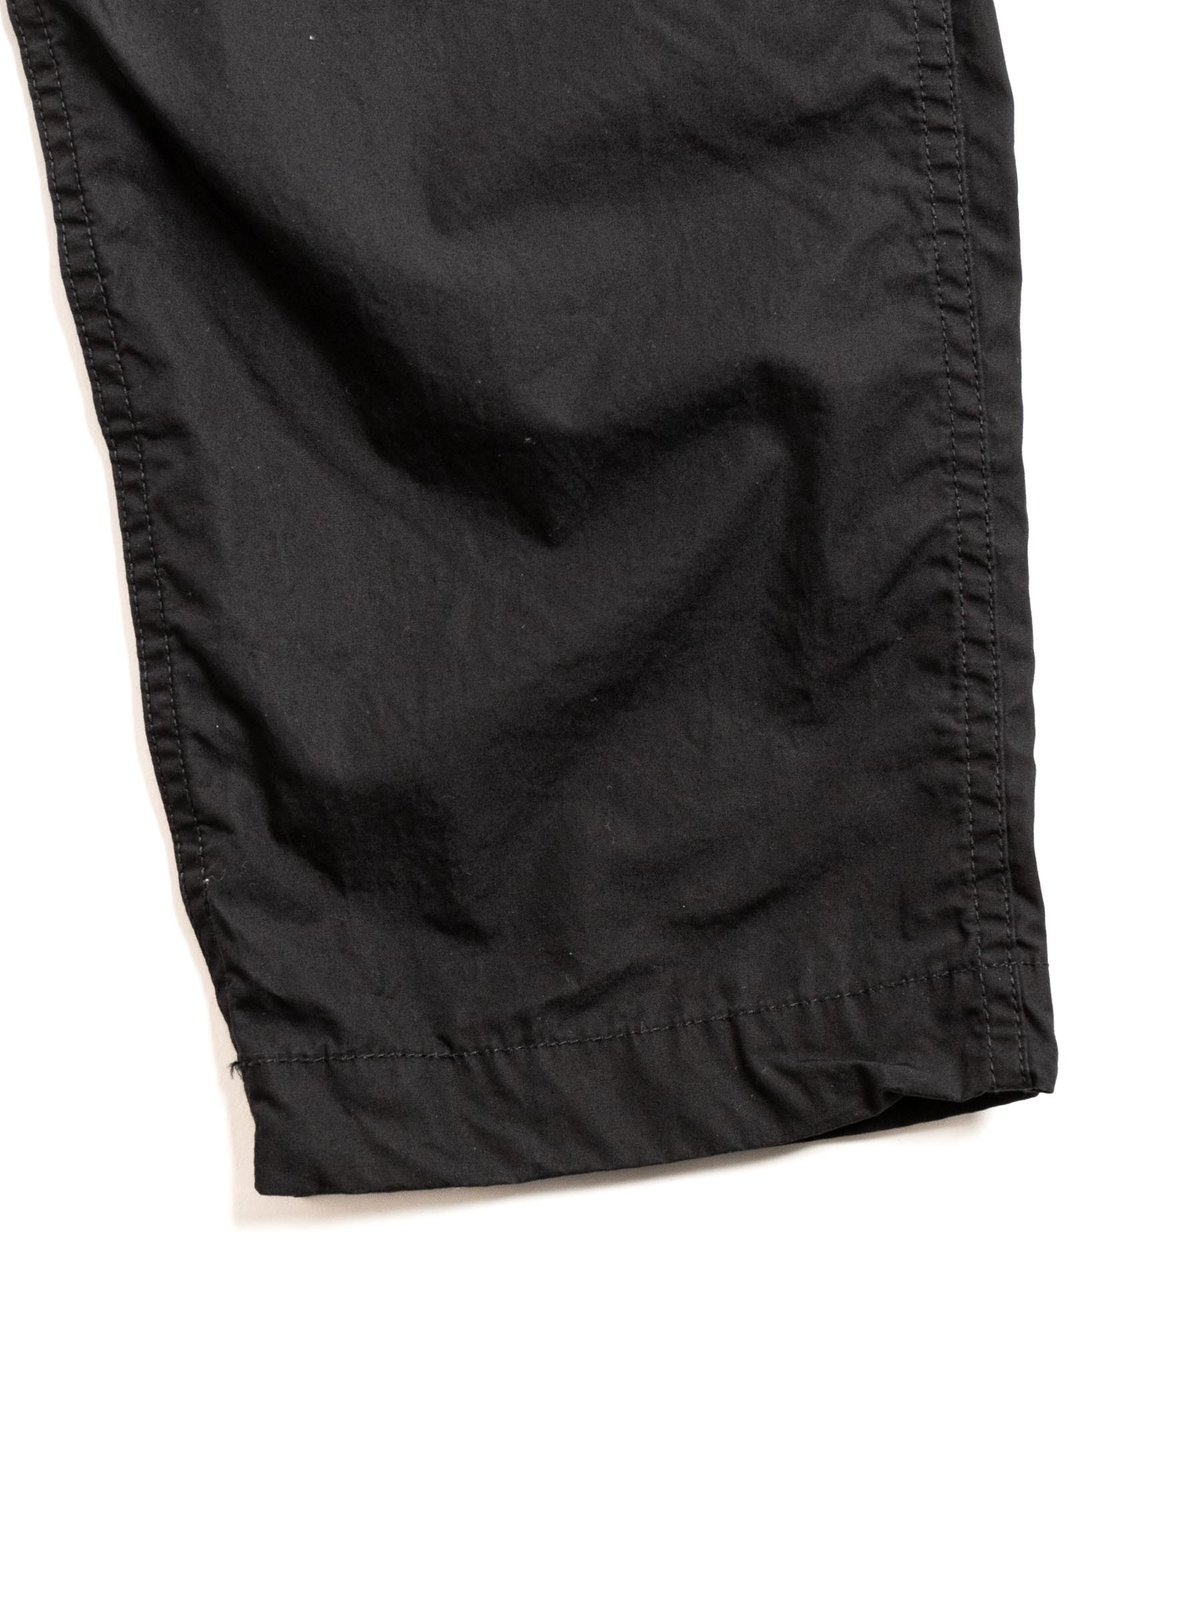 NEW YORKER PANT BLACK COTTON TYPEWRITER CLOTH - Image 4